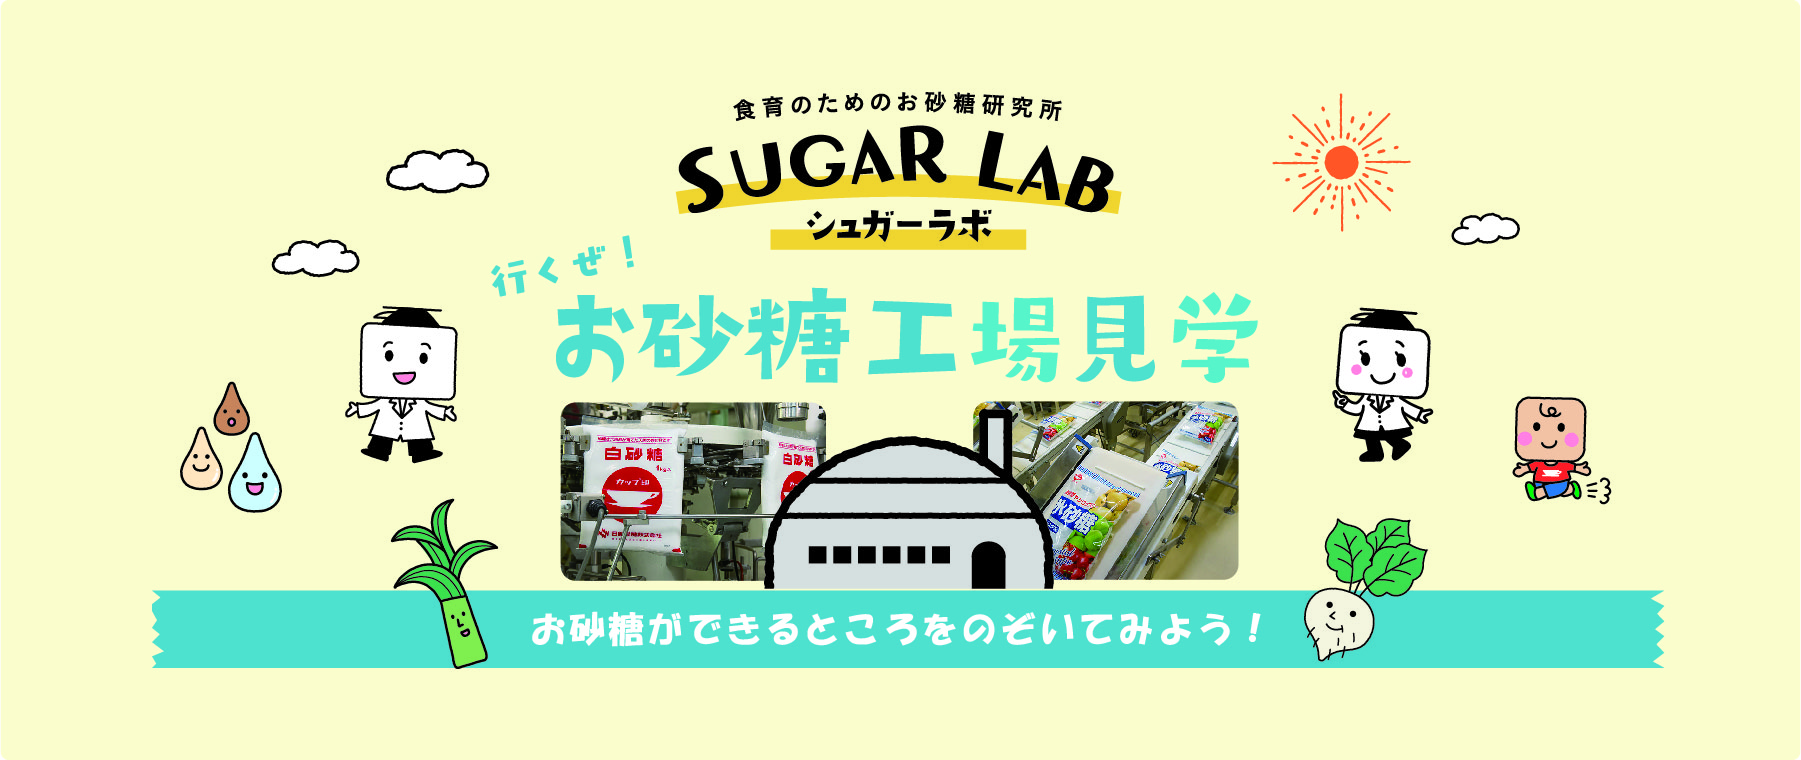 【Webページ工場見学】日新製糖株式会社 「バーチャル工場見学」お砂糖ができるところをのぞいてみよう！ thumbnail